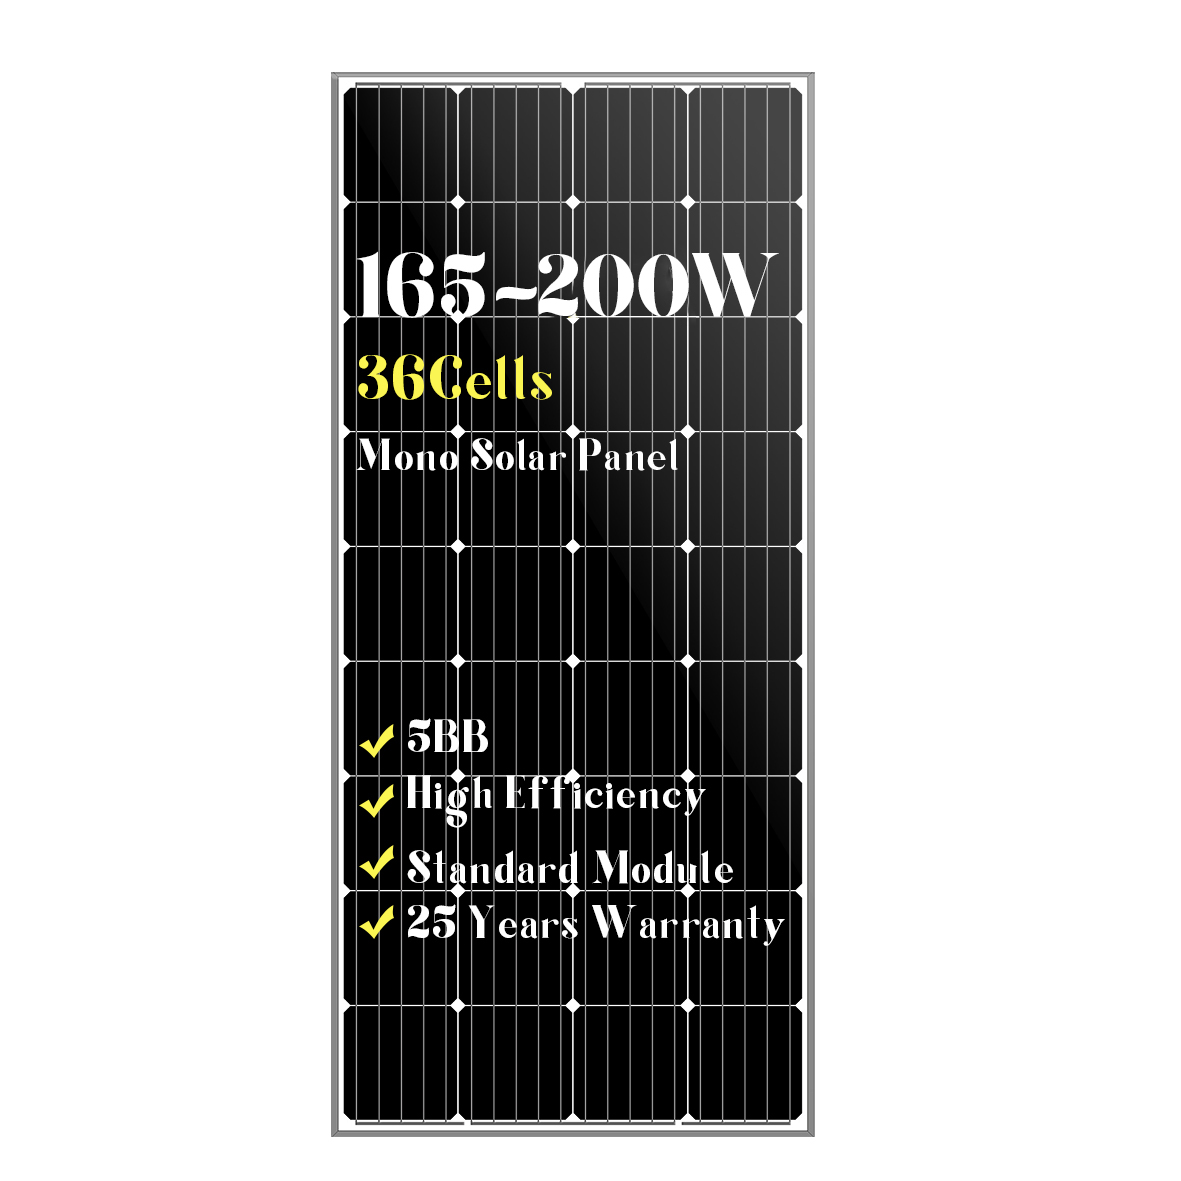 200W solar panel